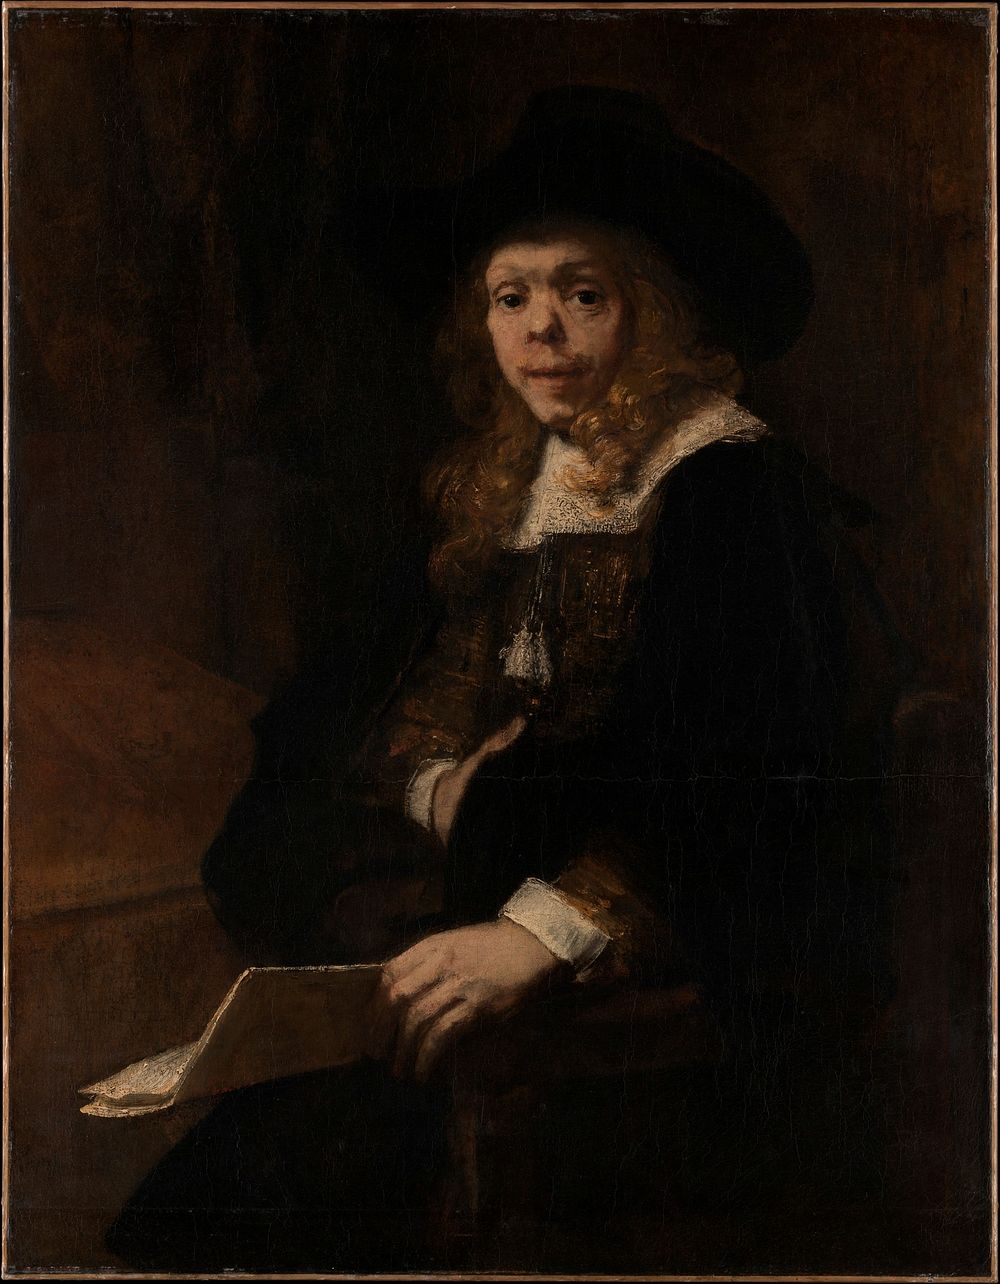 Portrait of Gerard de Lairesse by Rembrandt van Rijn